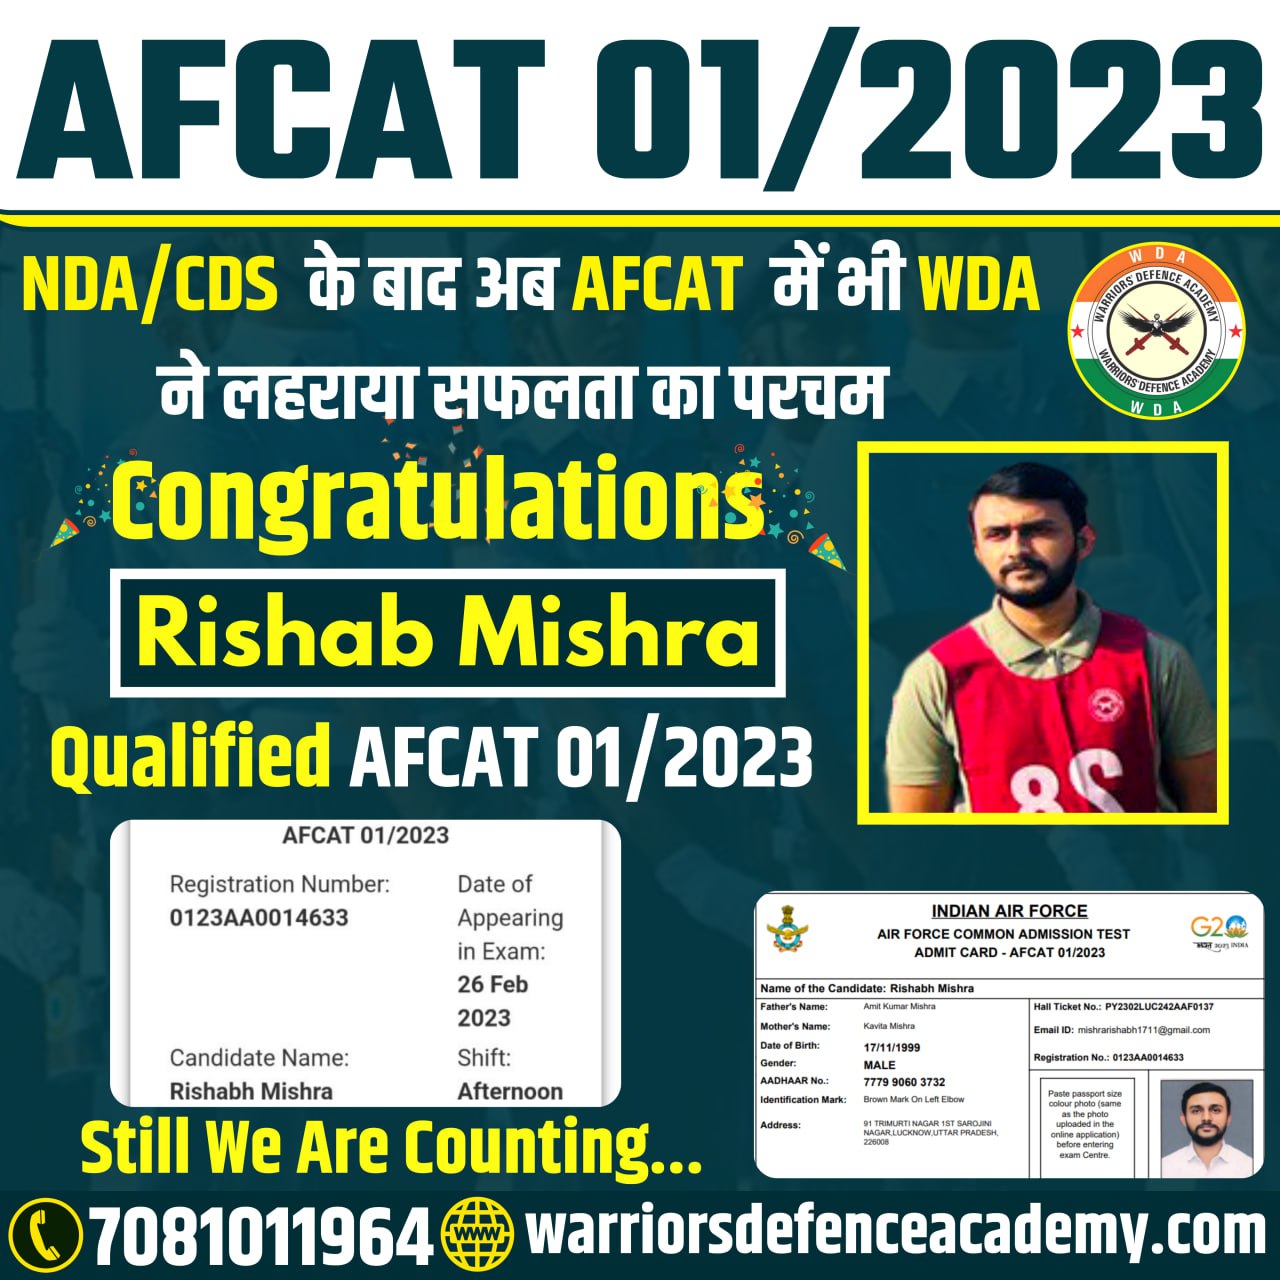 NDA 2022 Exam: Best NDA Coaching in Lucknow After 10th | Best Defence Coaching in Lucknow | Warriors Defence Academy Best NDA Coaching in Lucknow